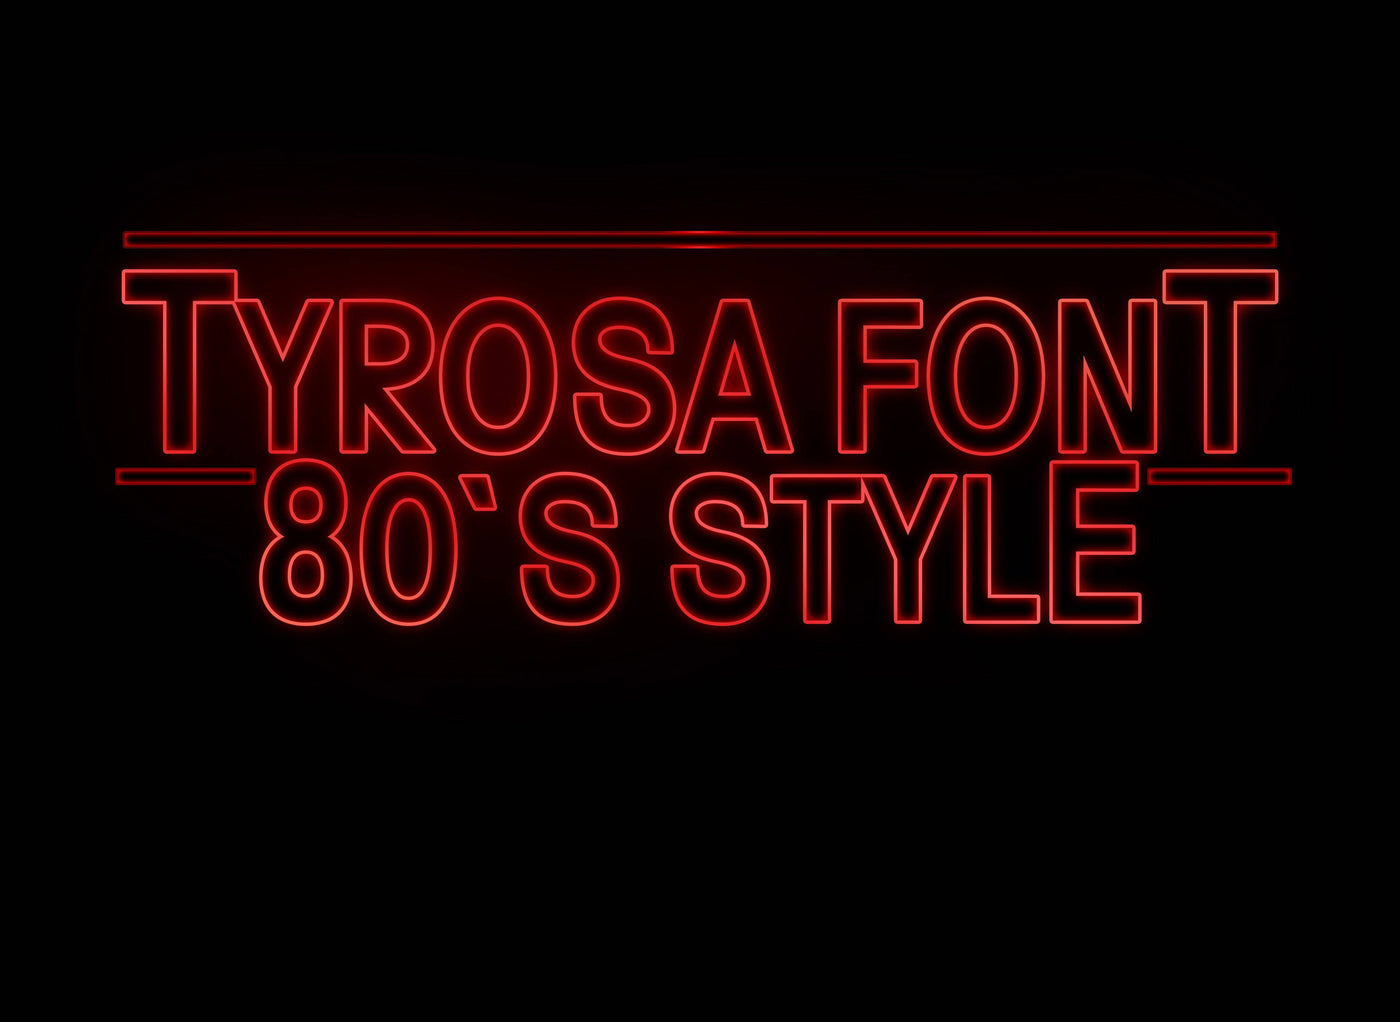 The 1980's Big Bundle Of 40 Fonts Styles - Artixty